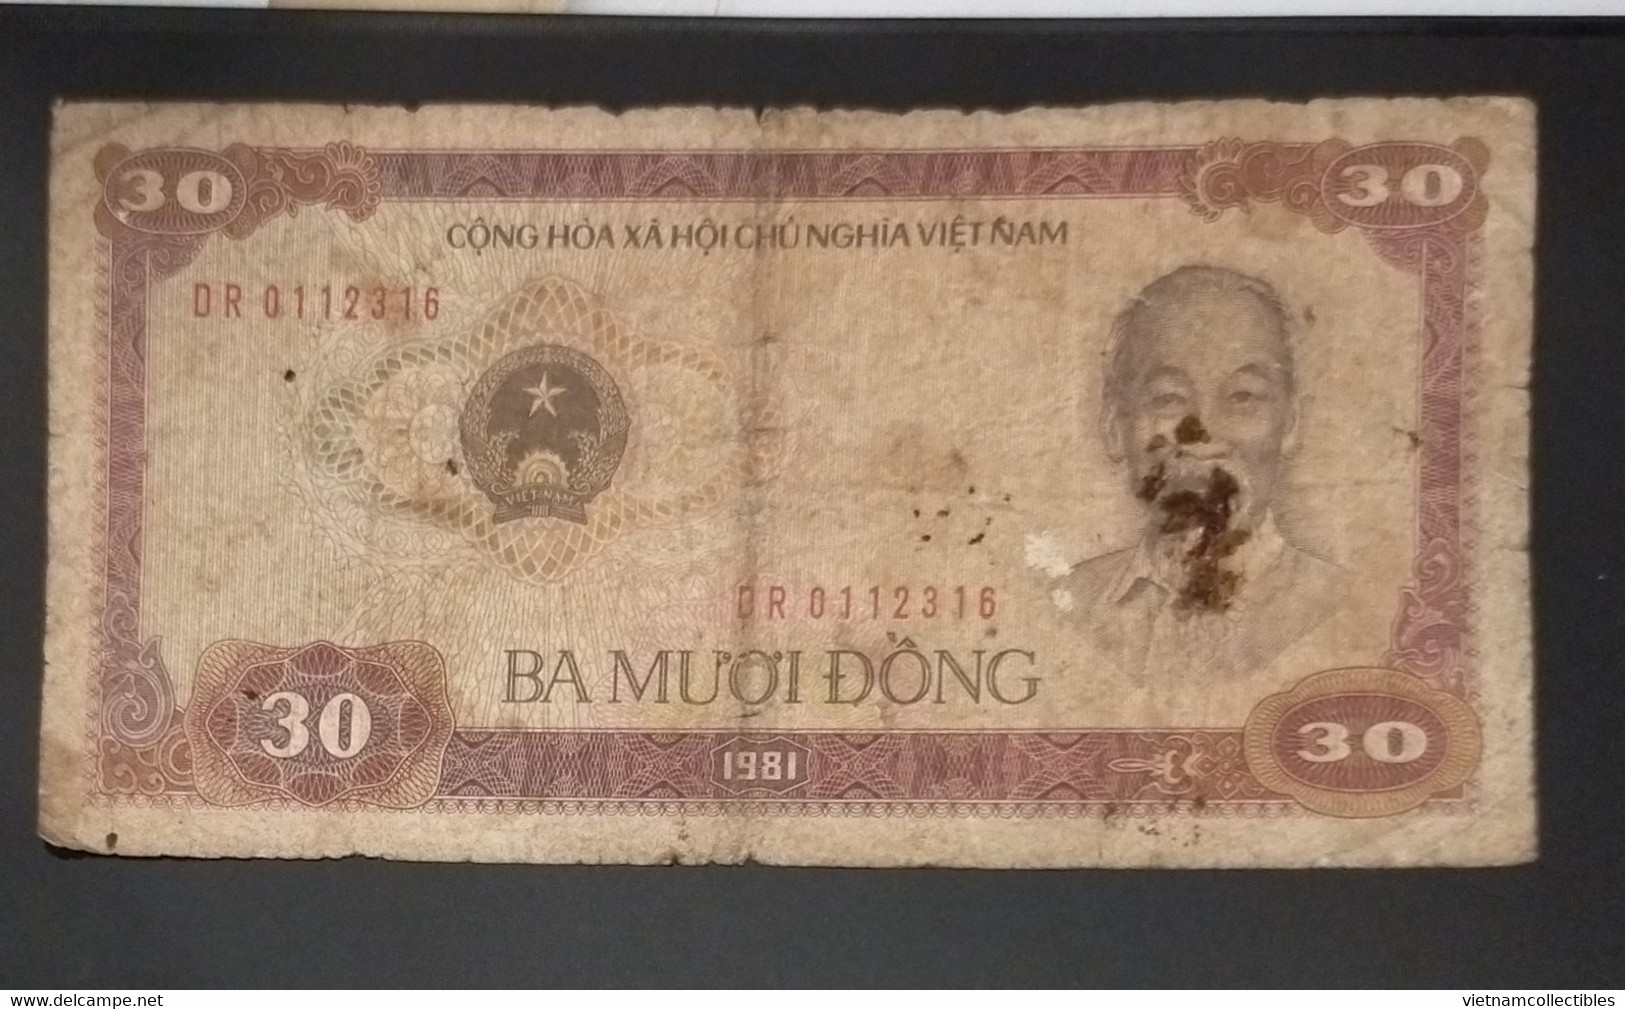 Viet Nam Vietnam 30 Dong Good Banknote Note 1981 - Pick # 87a / 02 Photo - Vietnam